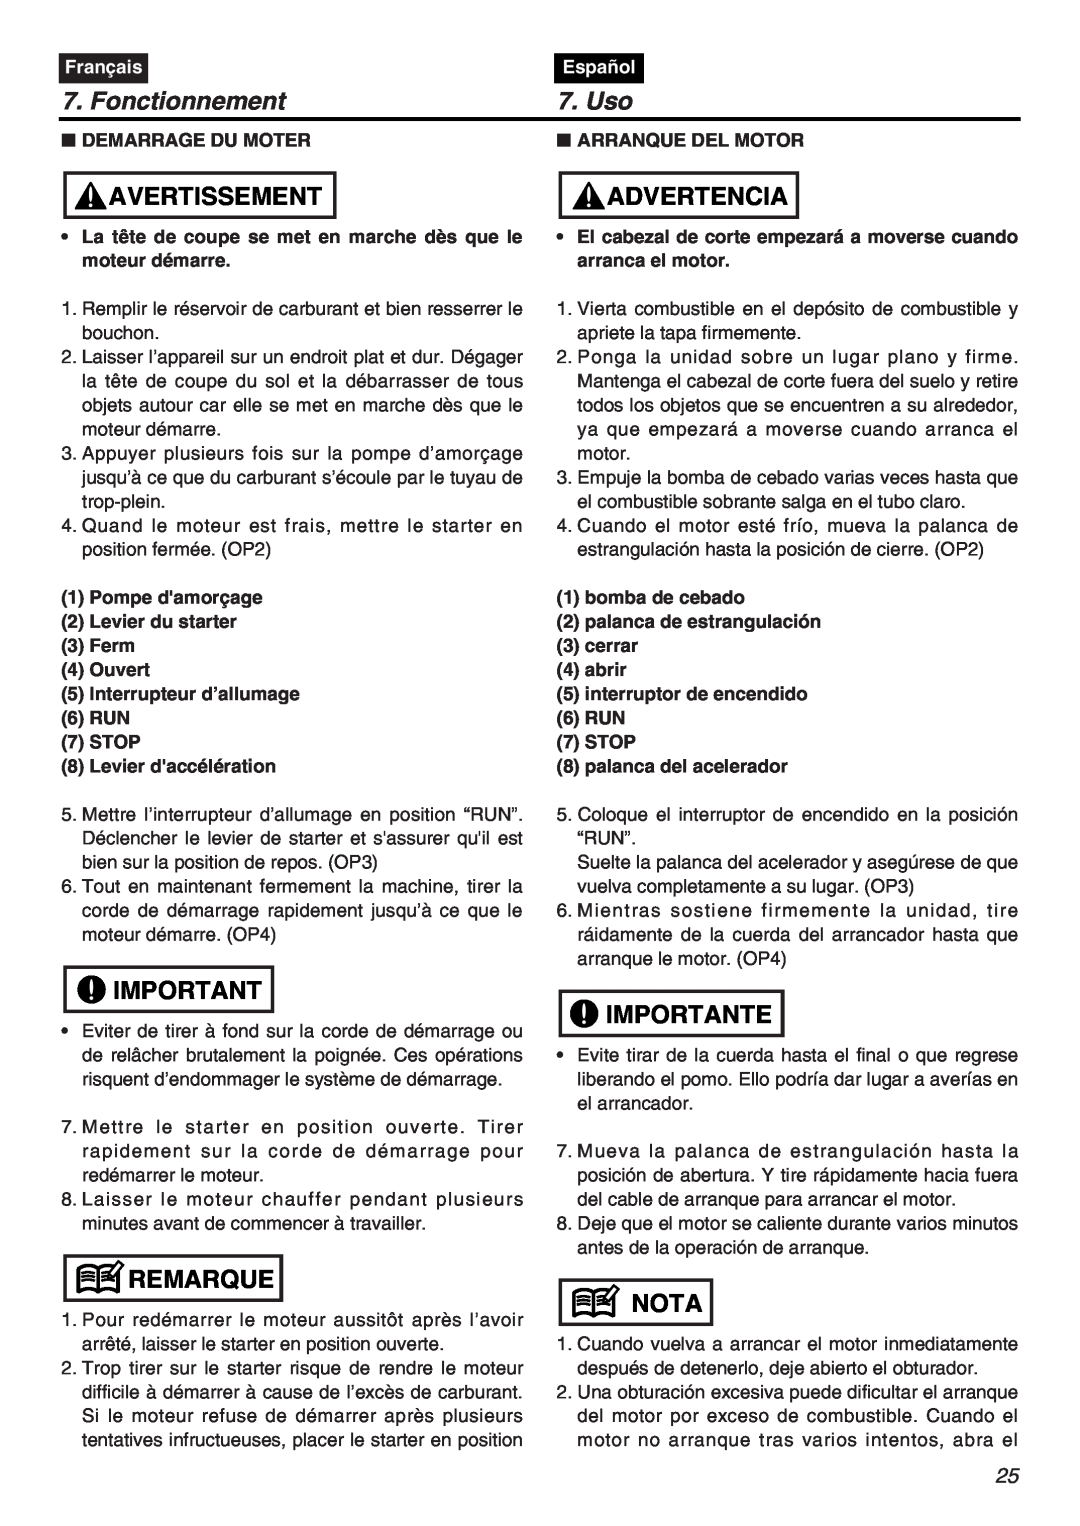 RedMax HTZ2401-CA Fonctionnement, Uso, Demarrage Du Moter, Arranque Del Motor, Avertissement, Advertencia, Remarque, Nota 